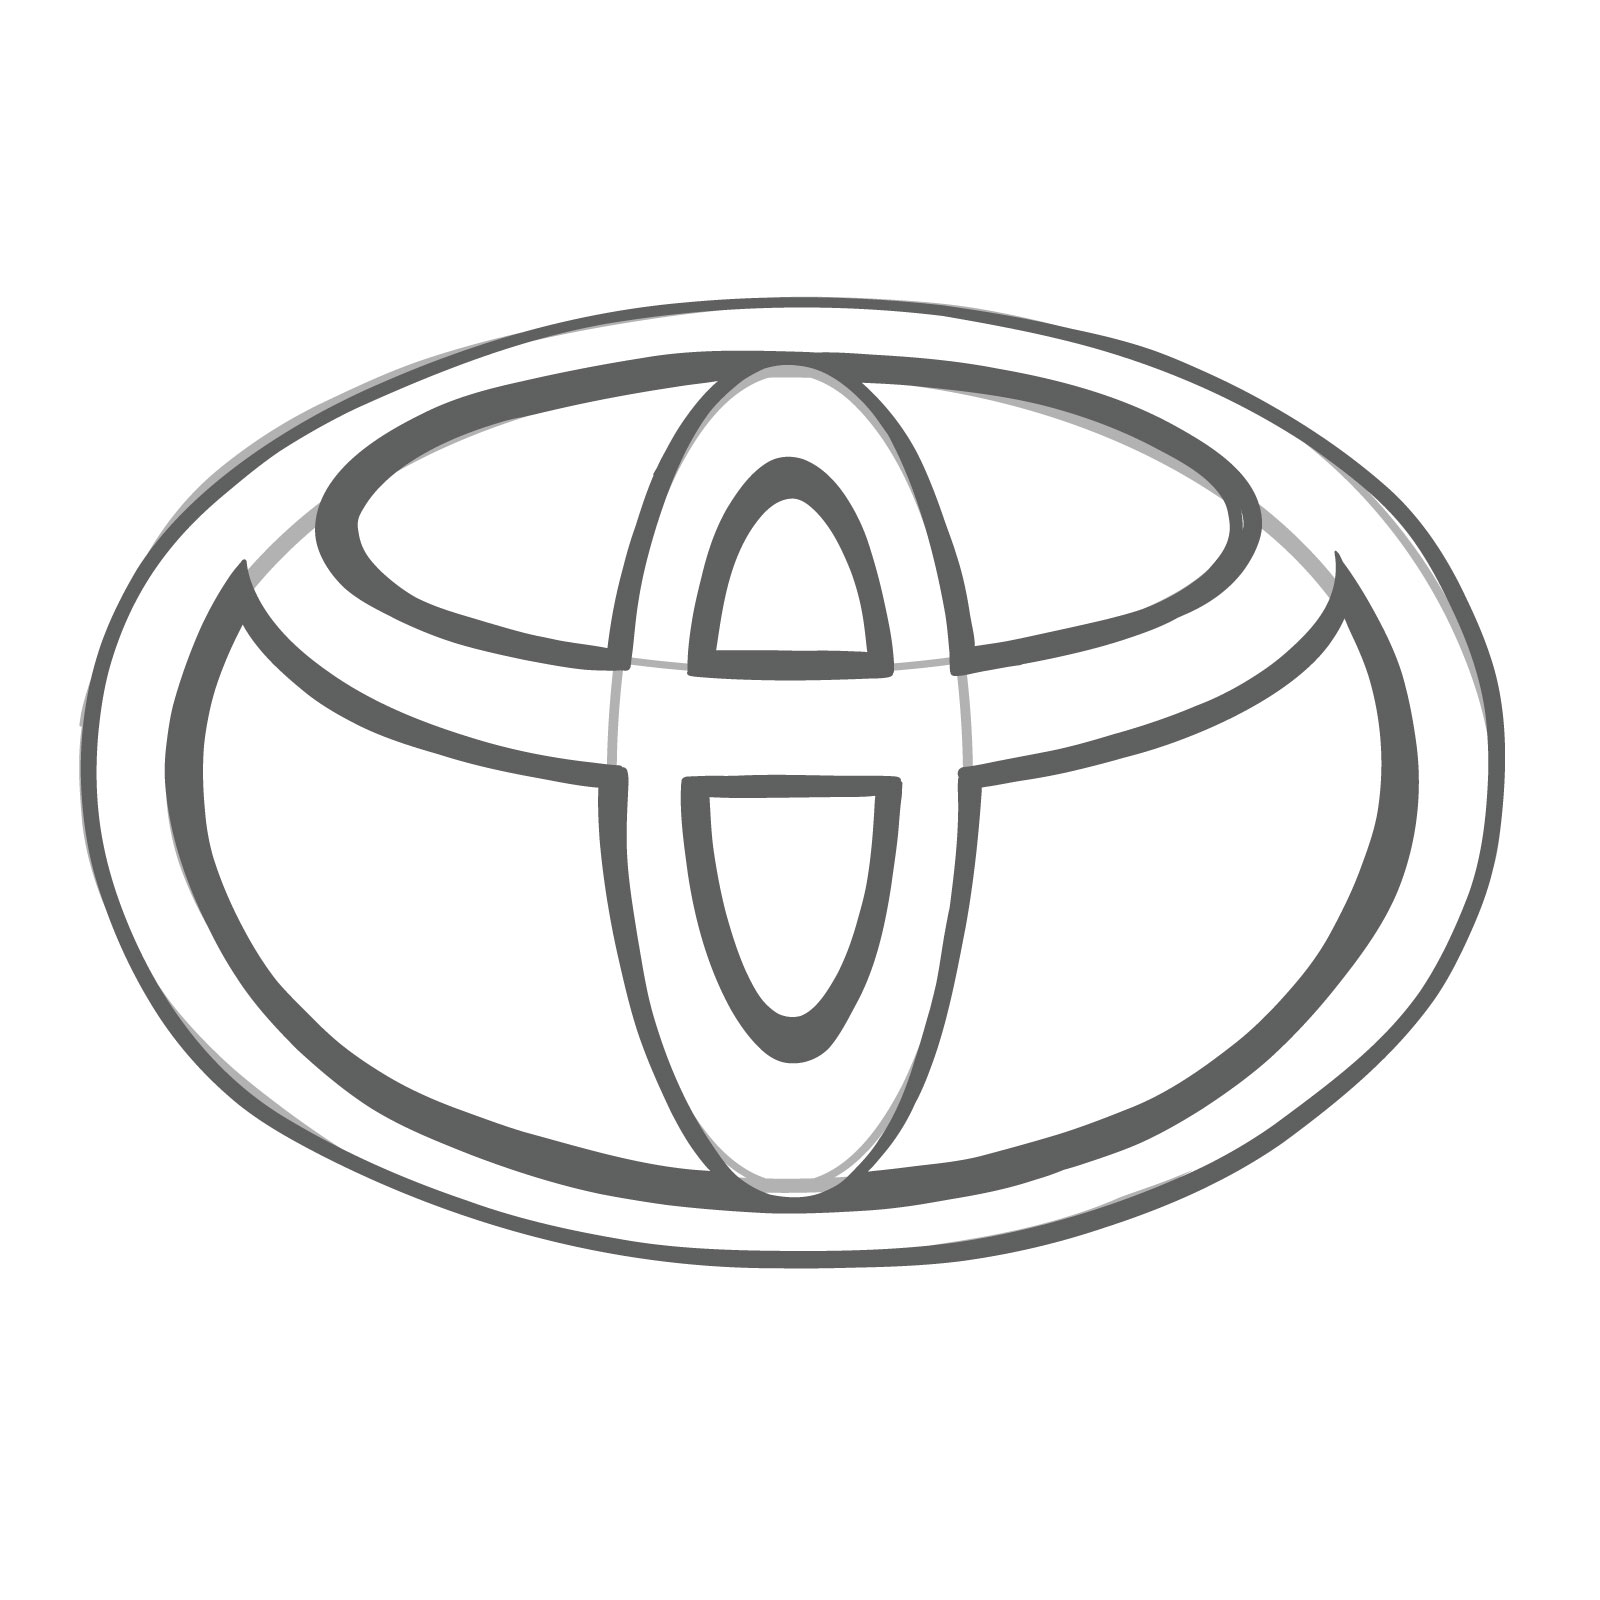 How to draw a Toyota logo - step 11